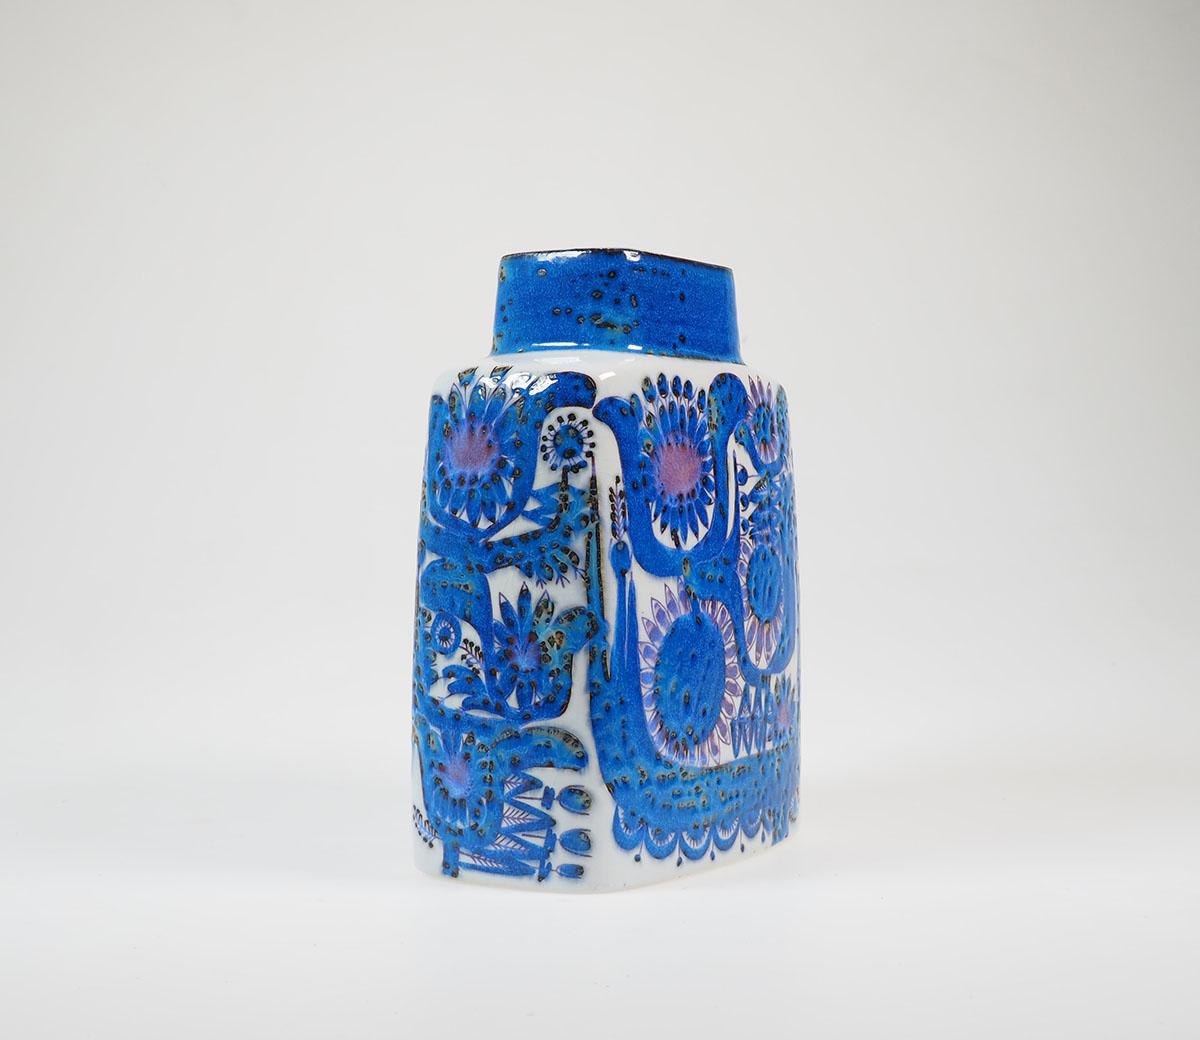 Glazed Royal Copenhagen fajance vase by Berte Jessen  For Sale